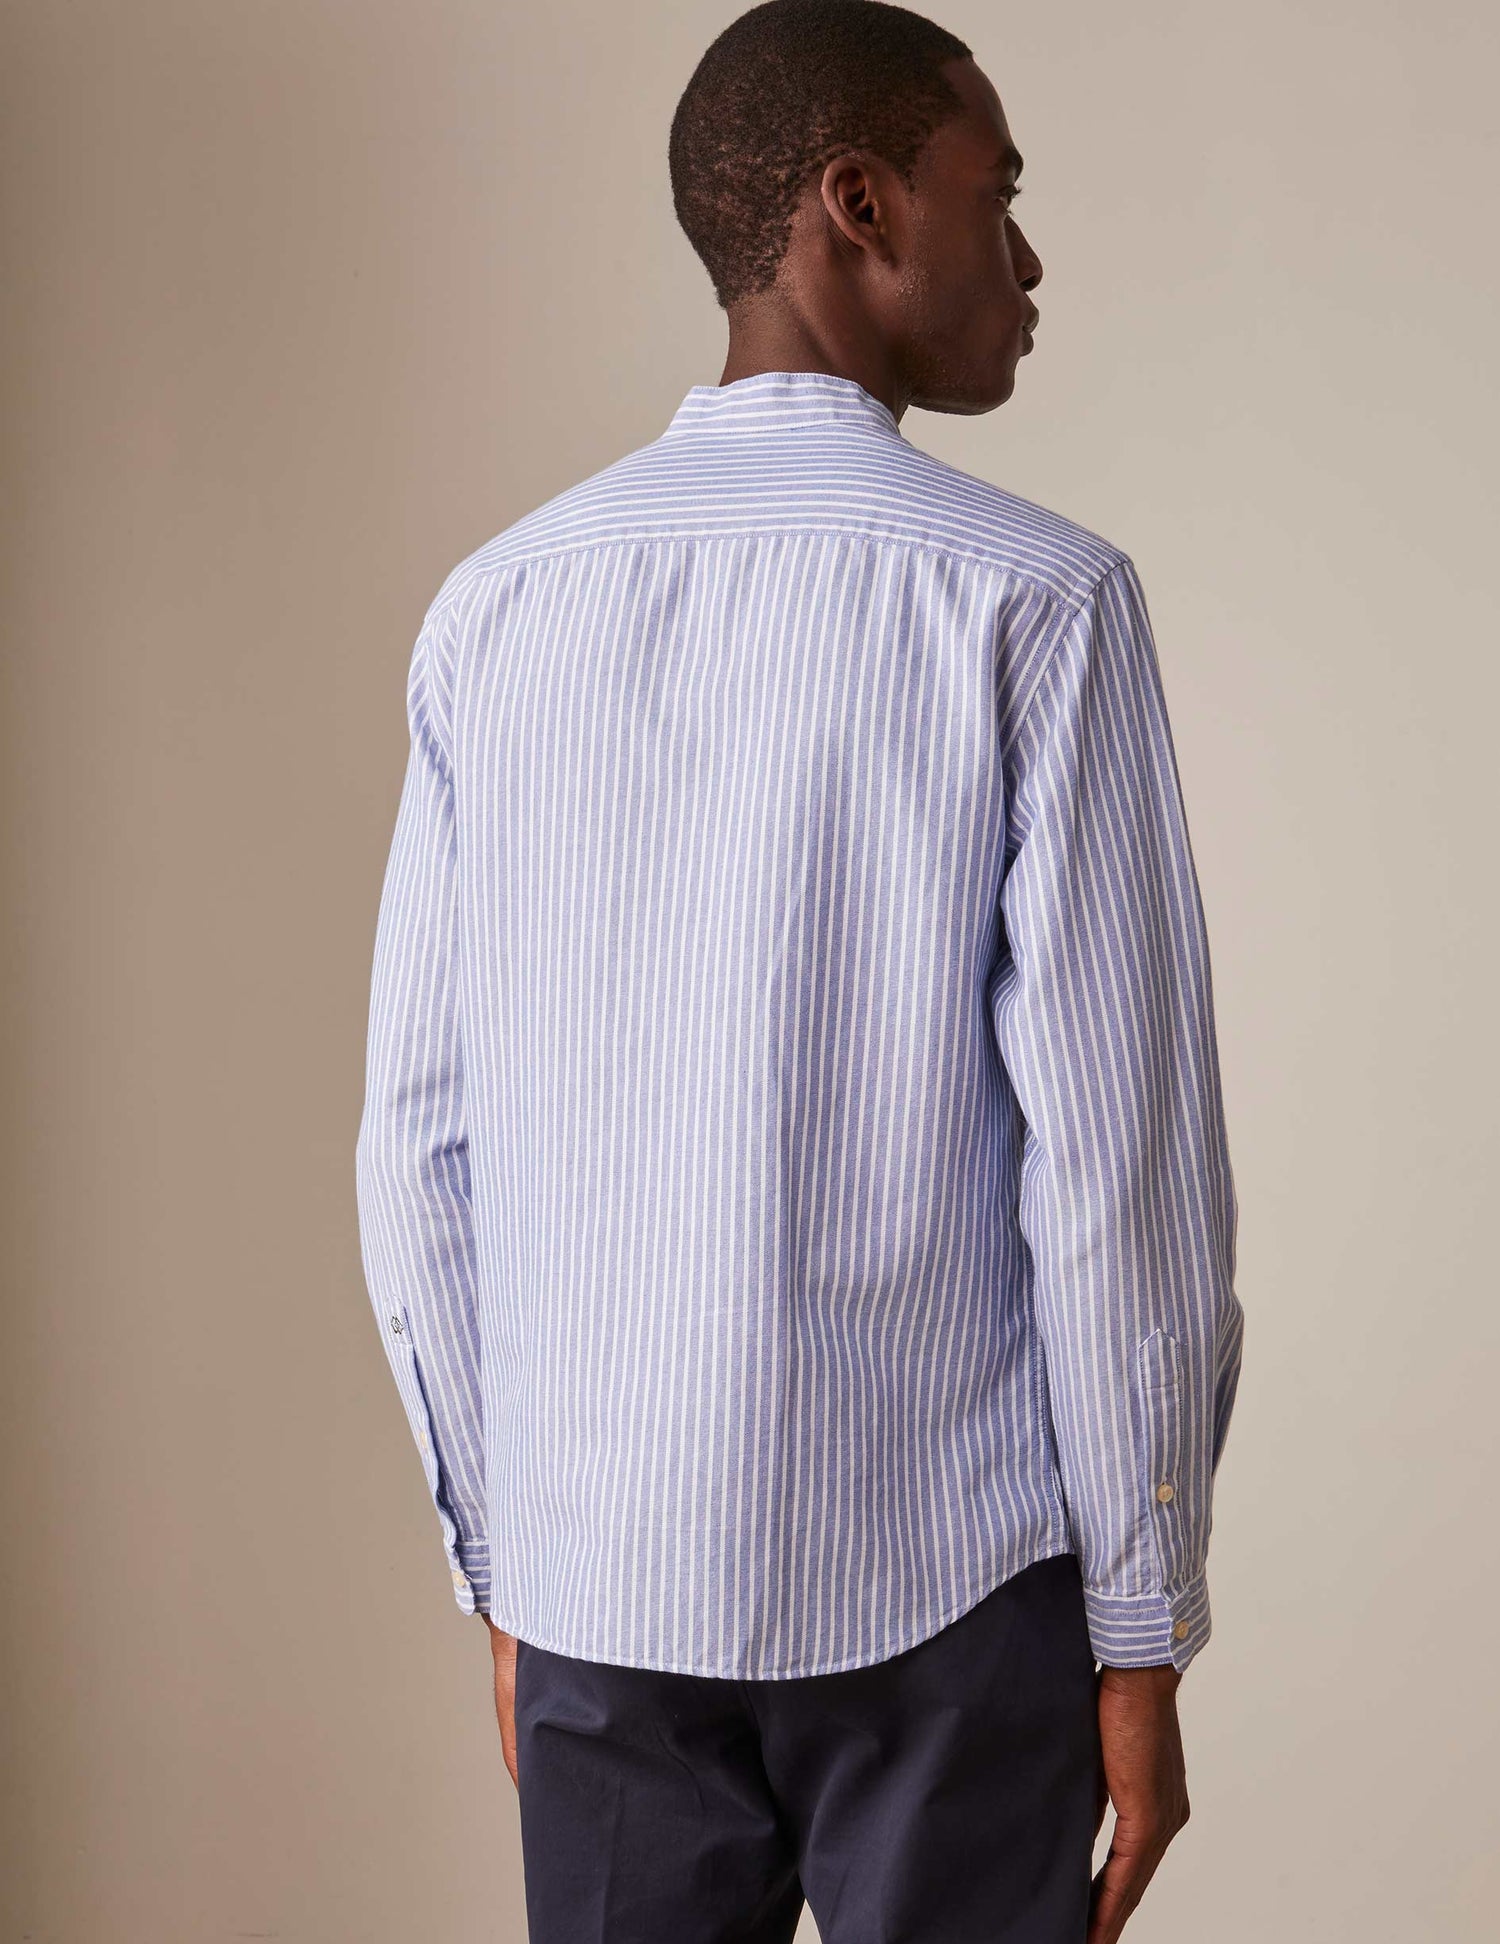 Blue striped Carl shirt - Oxford - Open straight Collar#2